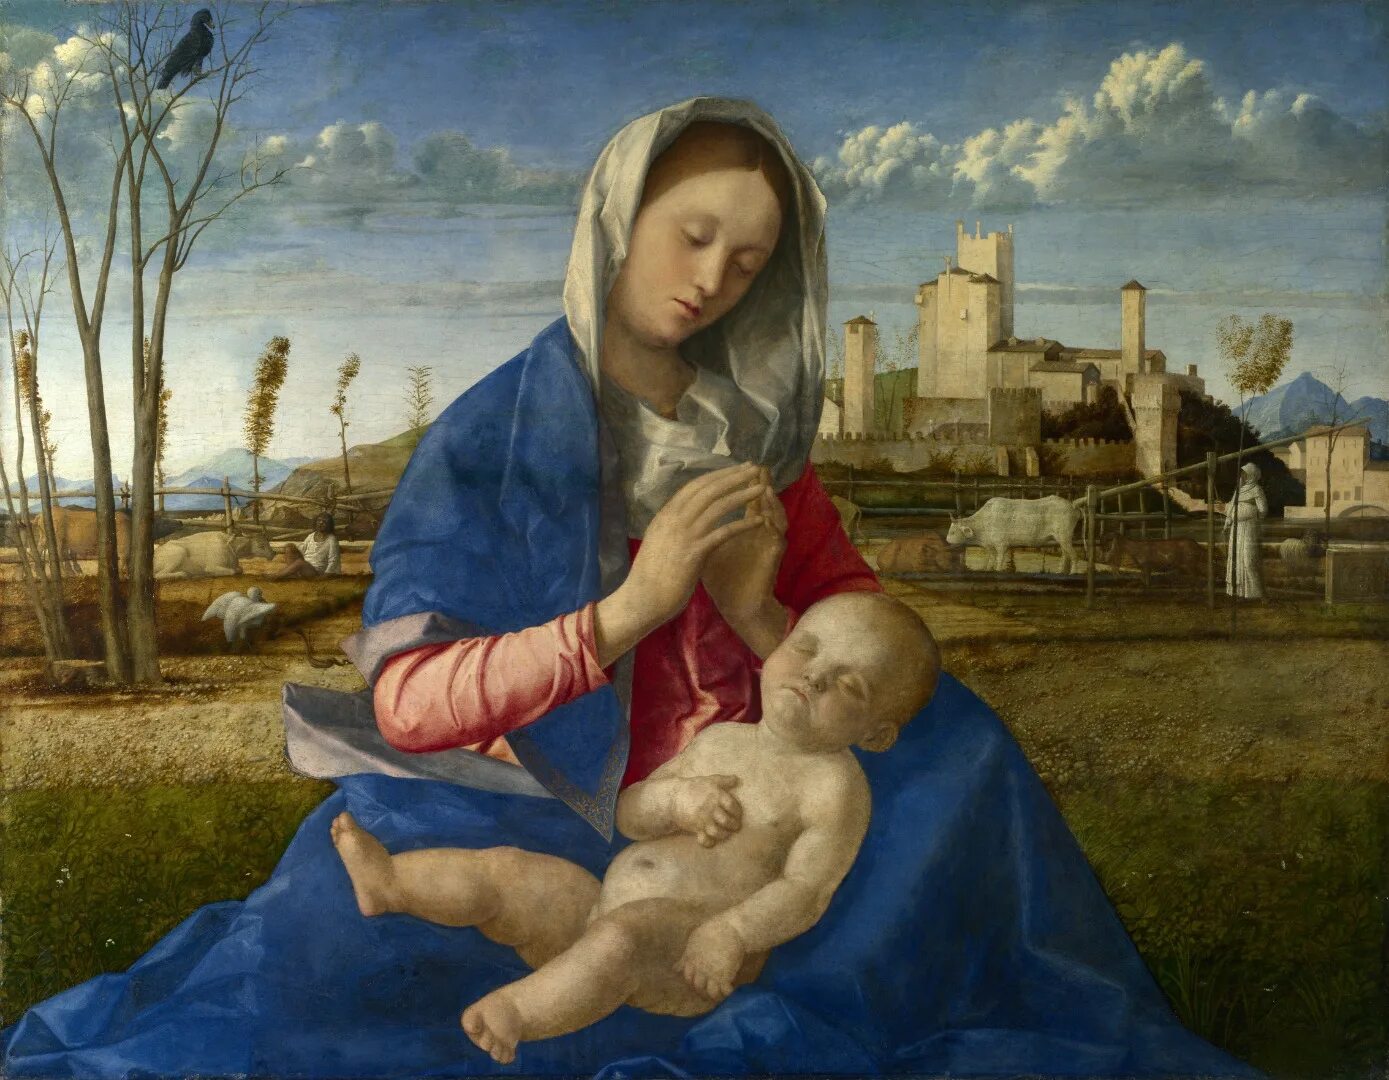 Произведение искусства возрождения. Джованни Беллини Мадонна на лугу. Джованни Беллини Мадонна с младенцем. Мадонна Луговая, Джованни (Джамбеллино) Беллини. Джованни Беллини (около 1430–1516).